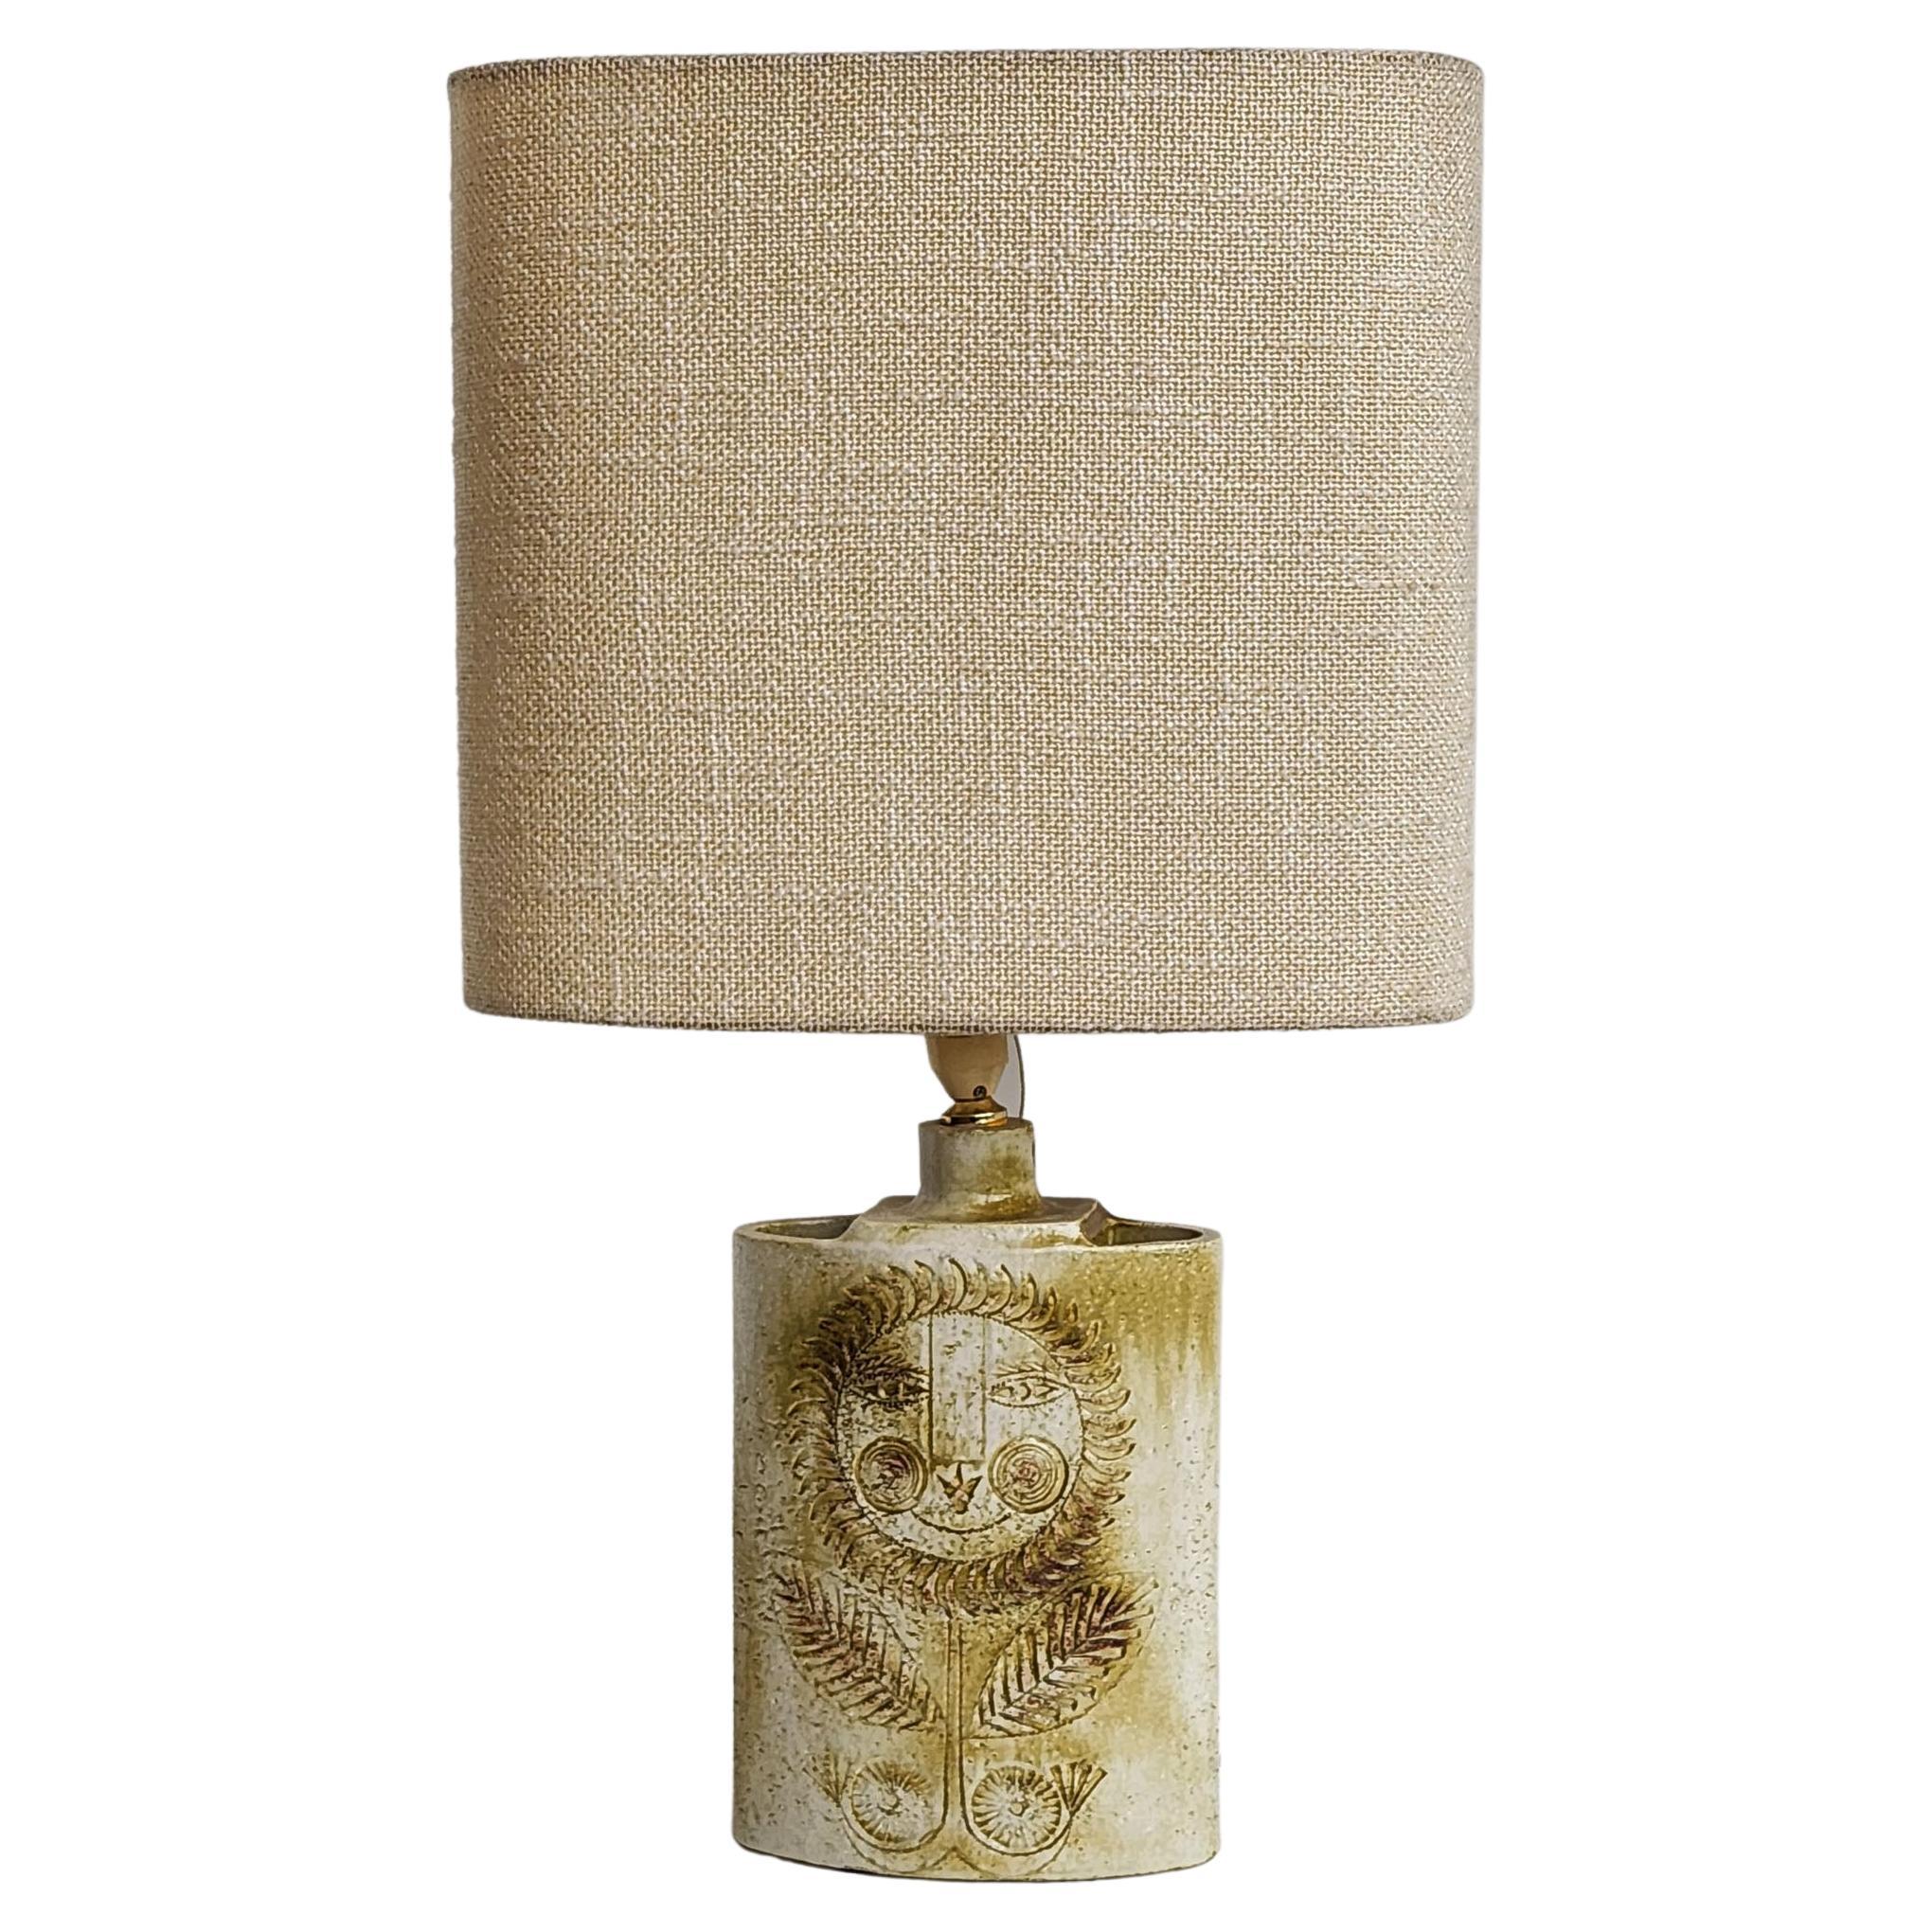 Roger Capron - Oval Cream Glazed Lamp